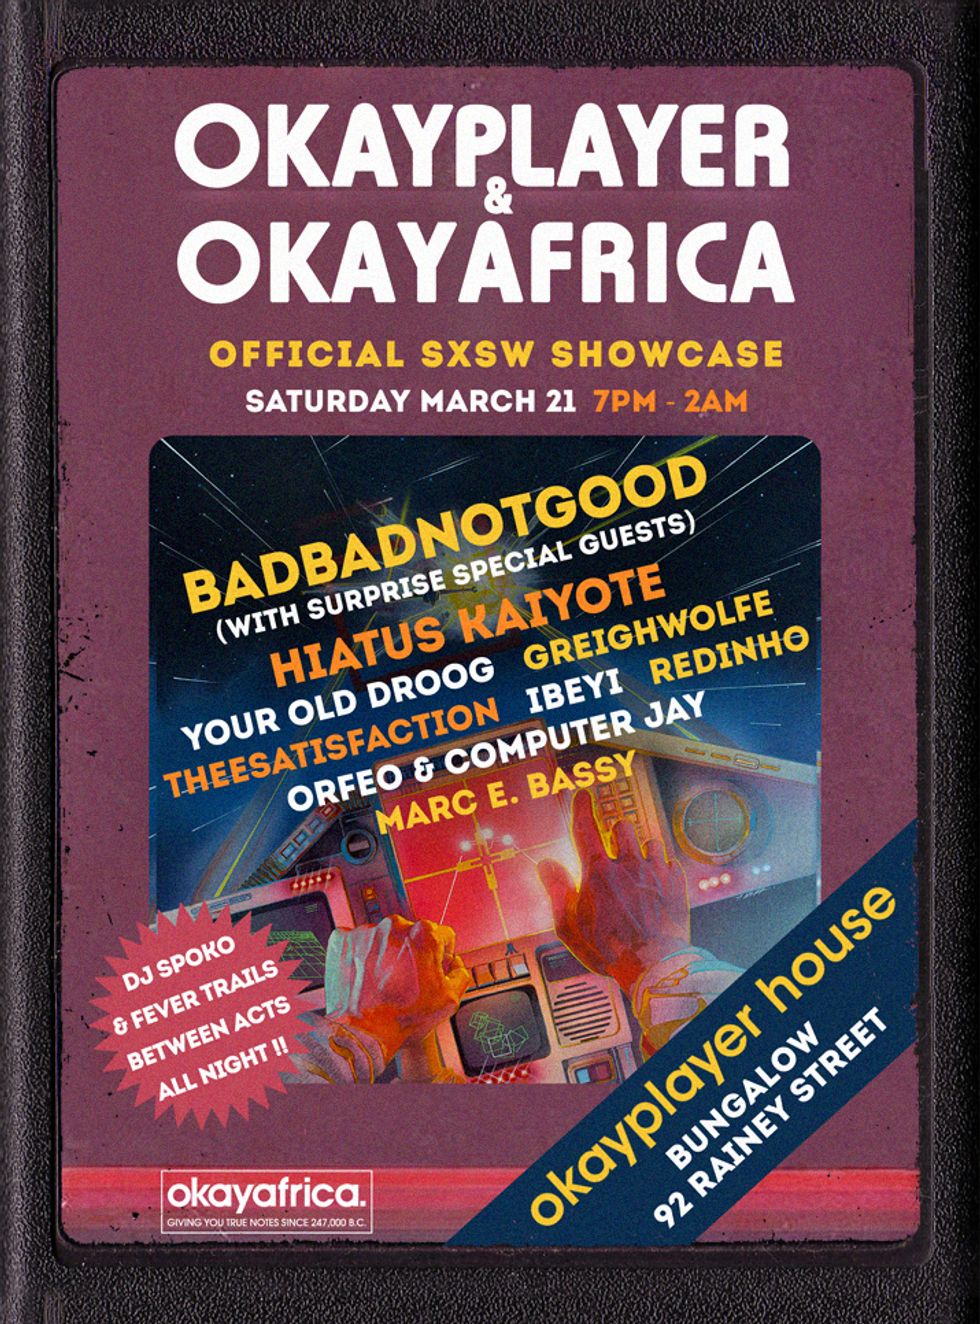 Okayplayer & Okayafrica Present Ibeyi, DJ Spoko & Fever Trails At SXSW 2015